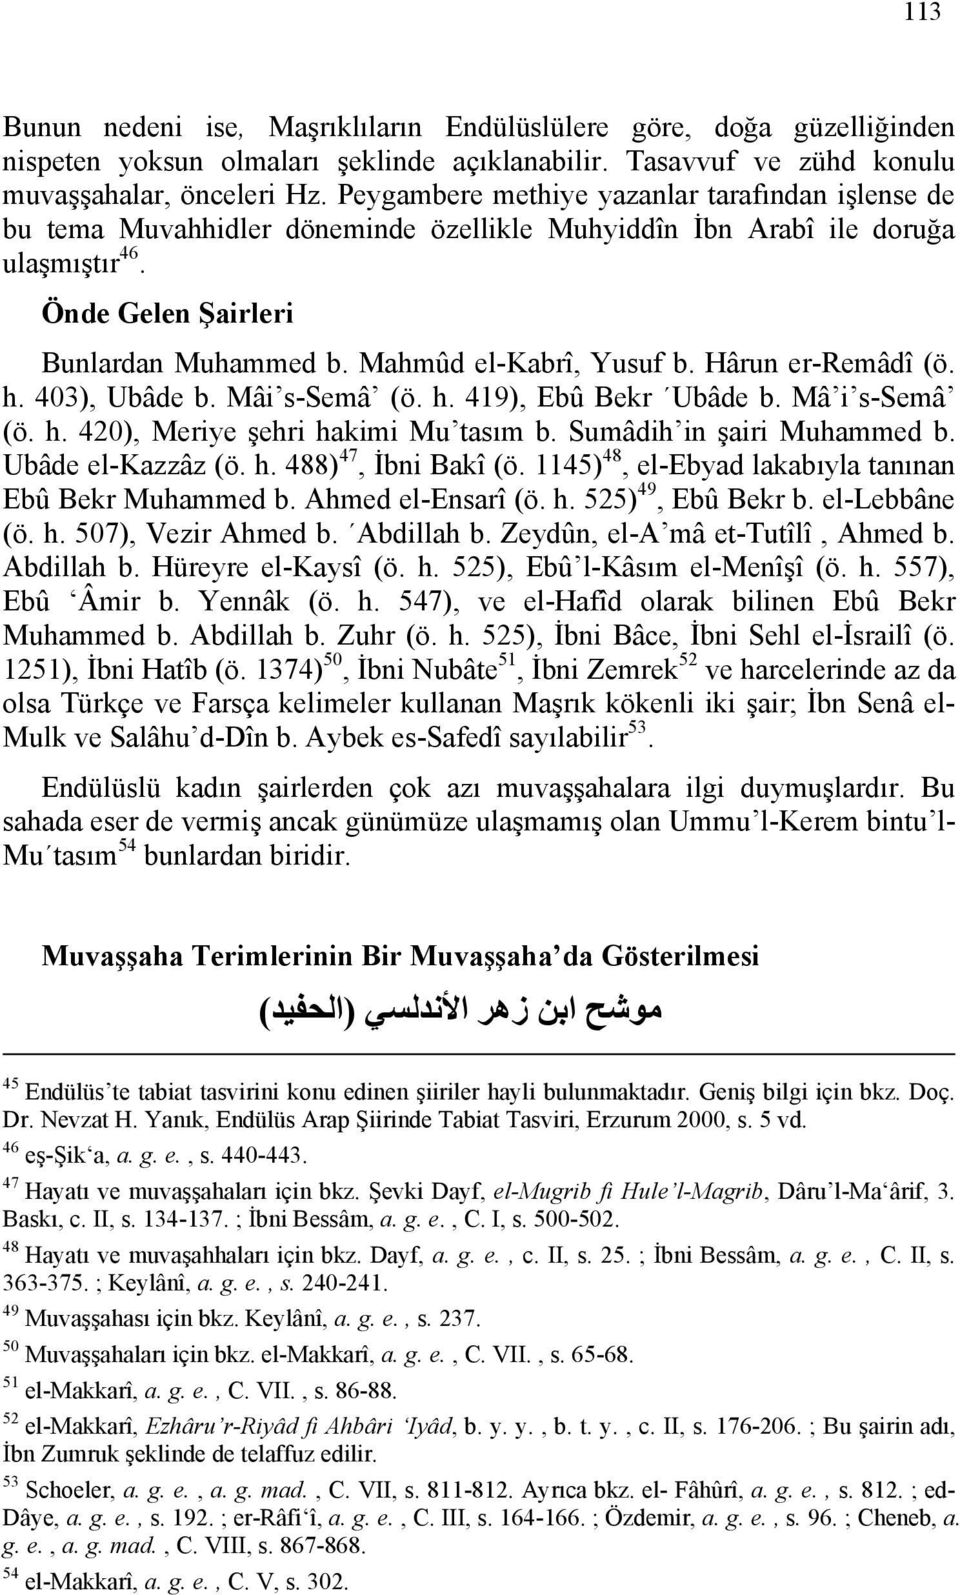 Mahmûd el-kabrî, Yusuf b. Hârun er-remâdî (ö. h. 403), Ubâde b. Mâi s-semâ (ö. h. 419), Ebû Bekr Ubâde b. Mâ i s-semâ (ö. h. 420), Meriye şehri hakimi Mu tasım b. Sumâdih in şairi Muhammed b.